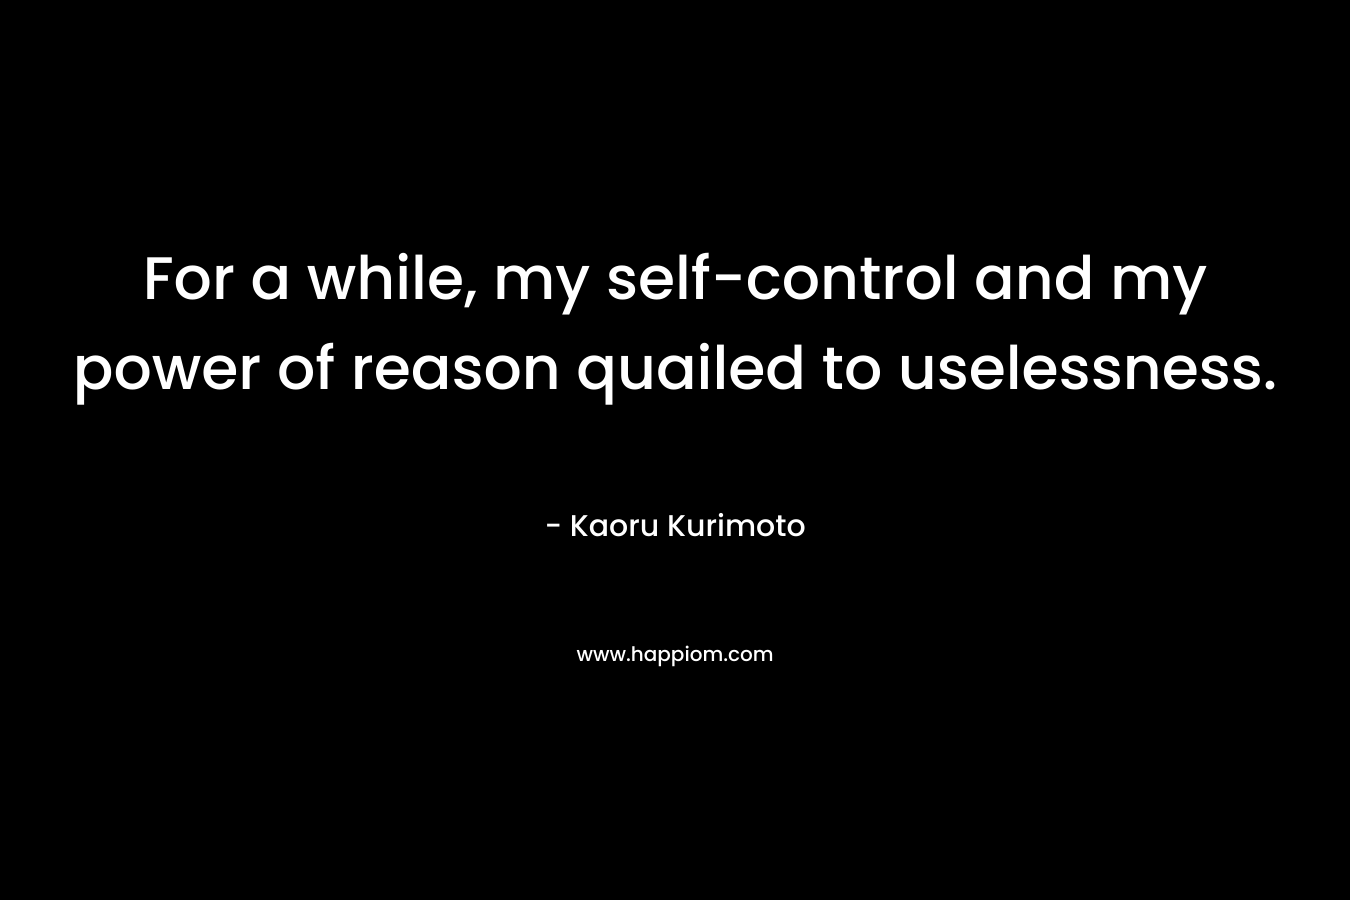 For a while, my self-control and my power of reason quailed to uselessness. – Kaoru Kurimoto